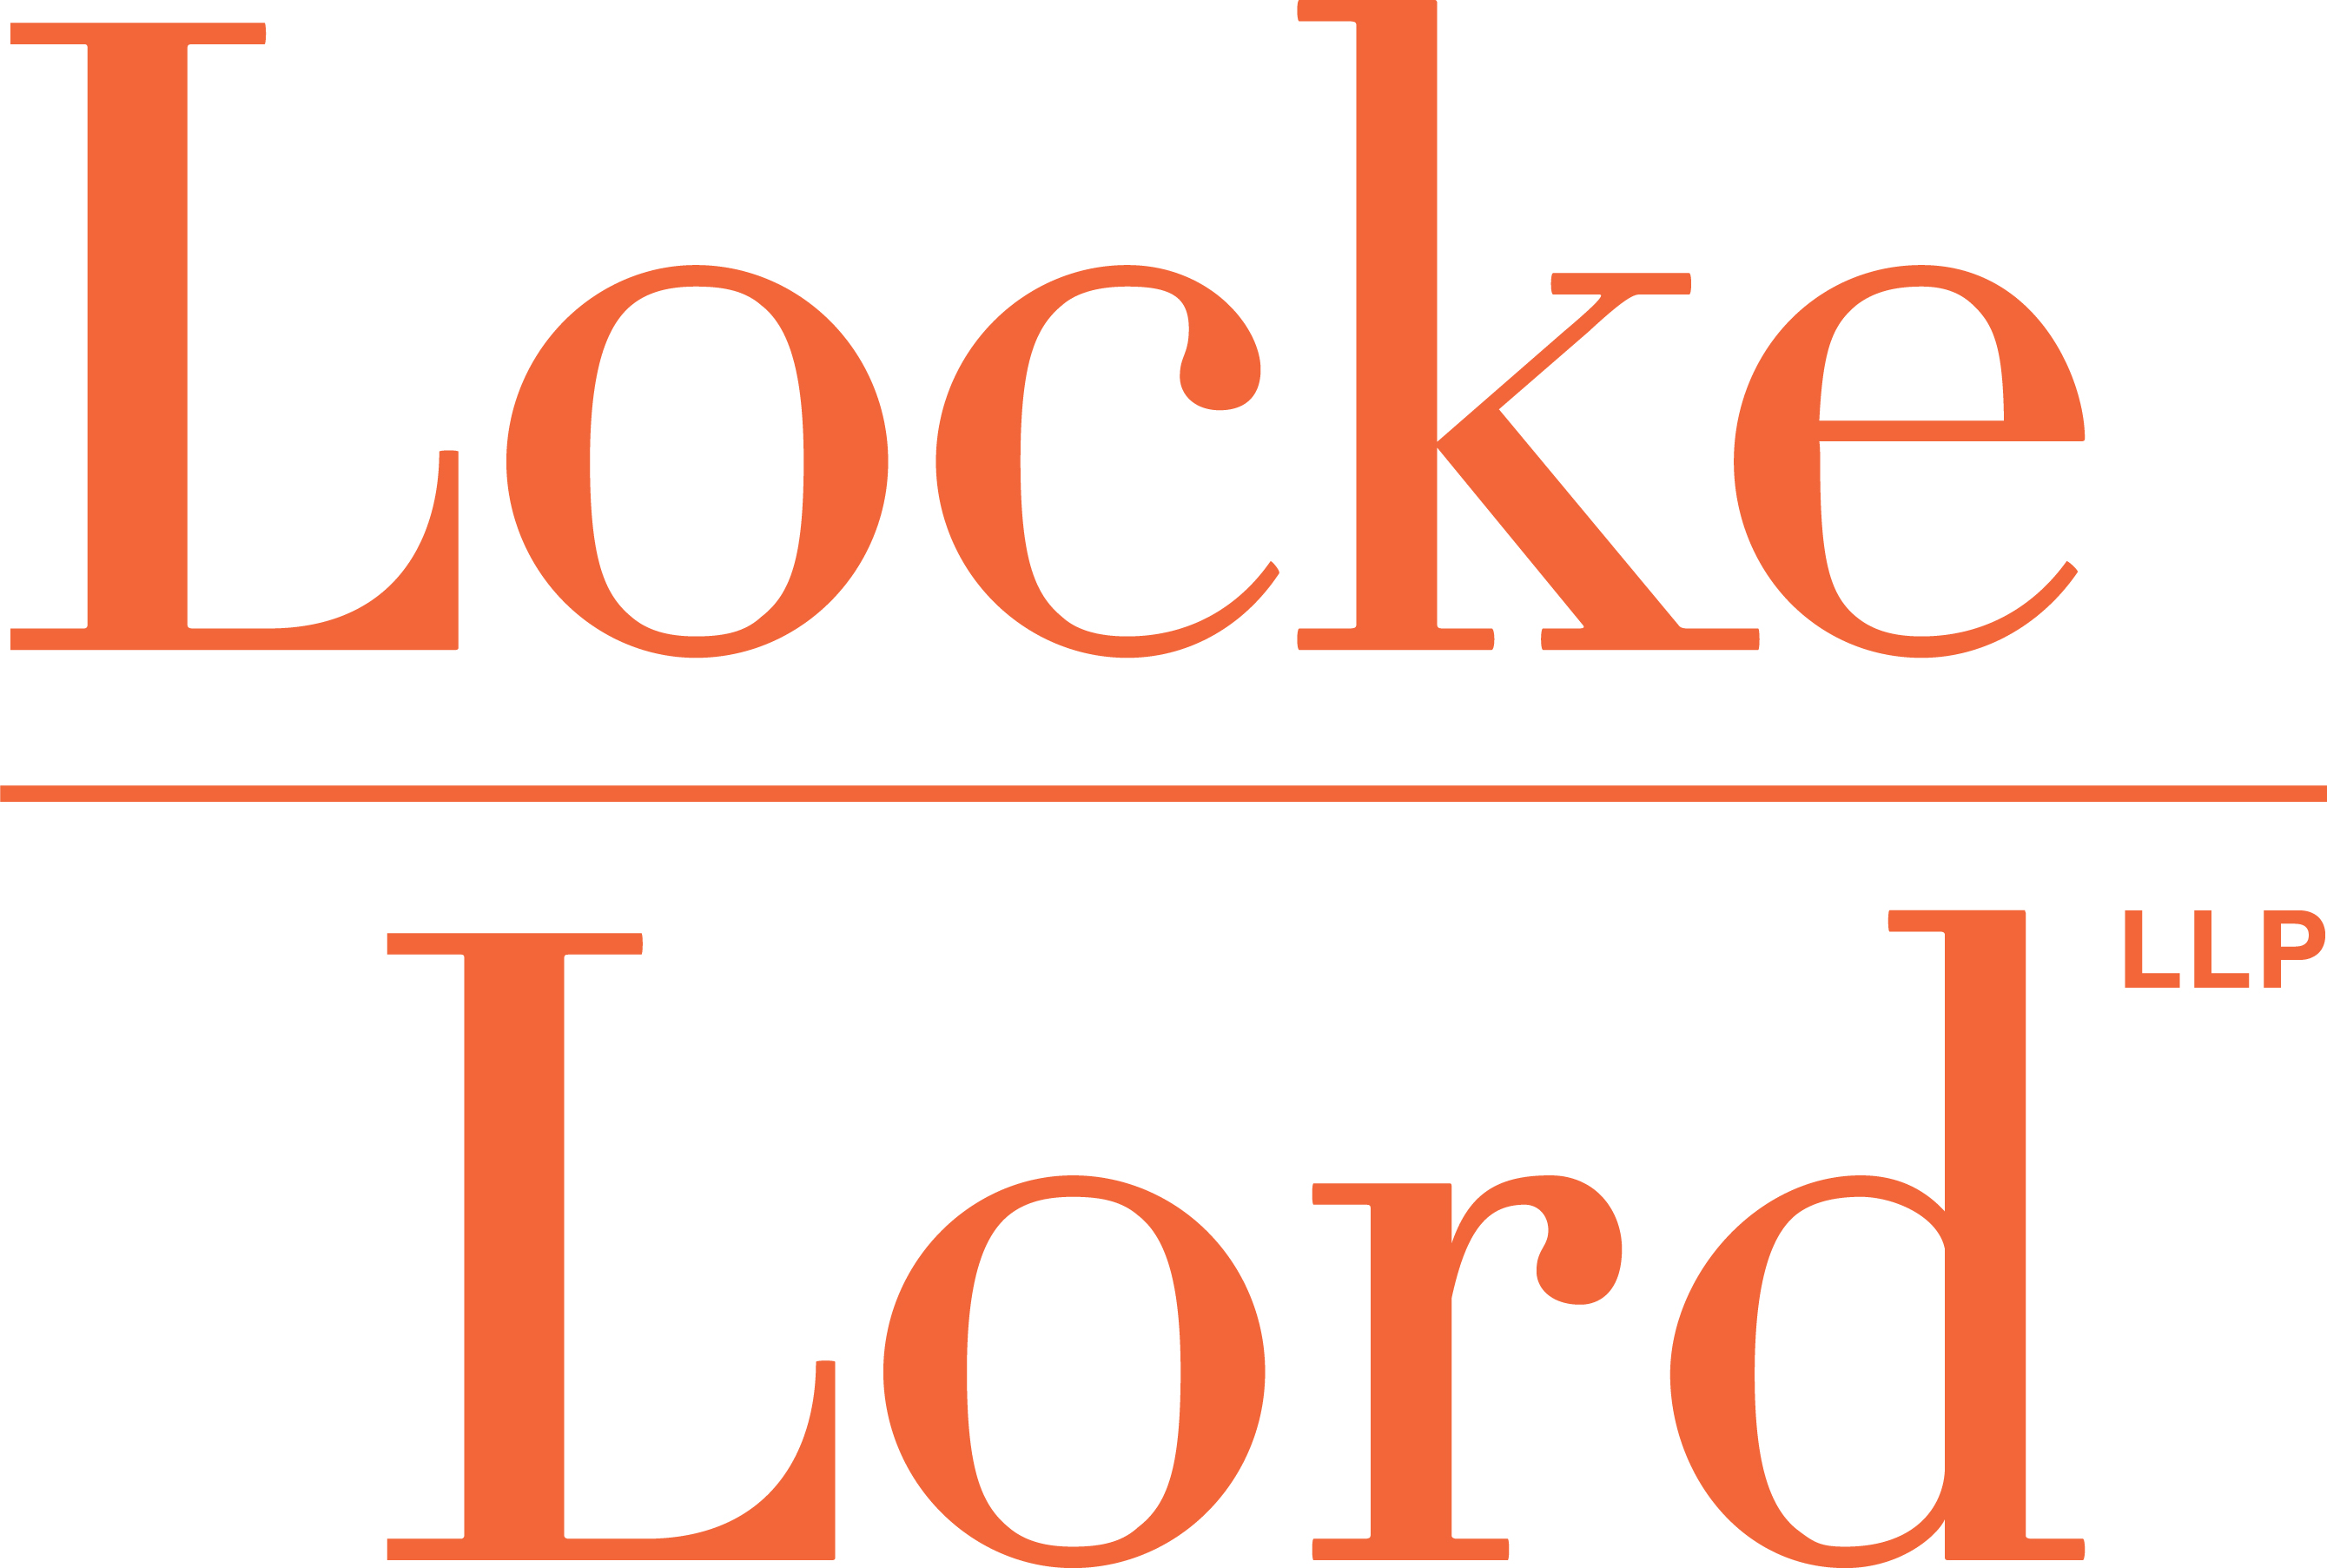 HHHH - Locke Lord